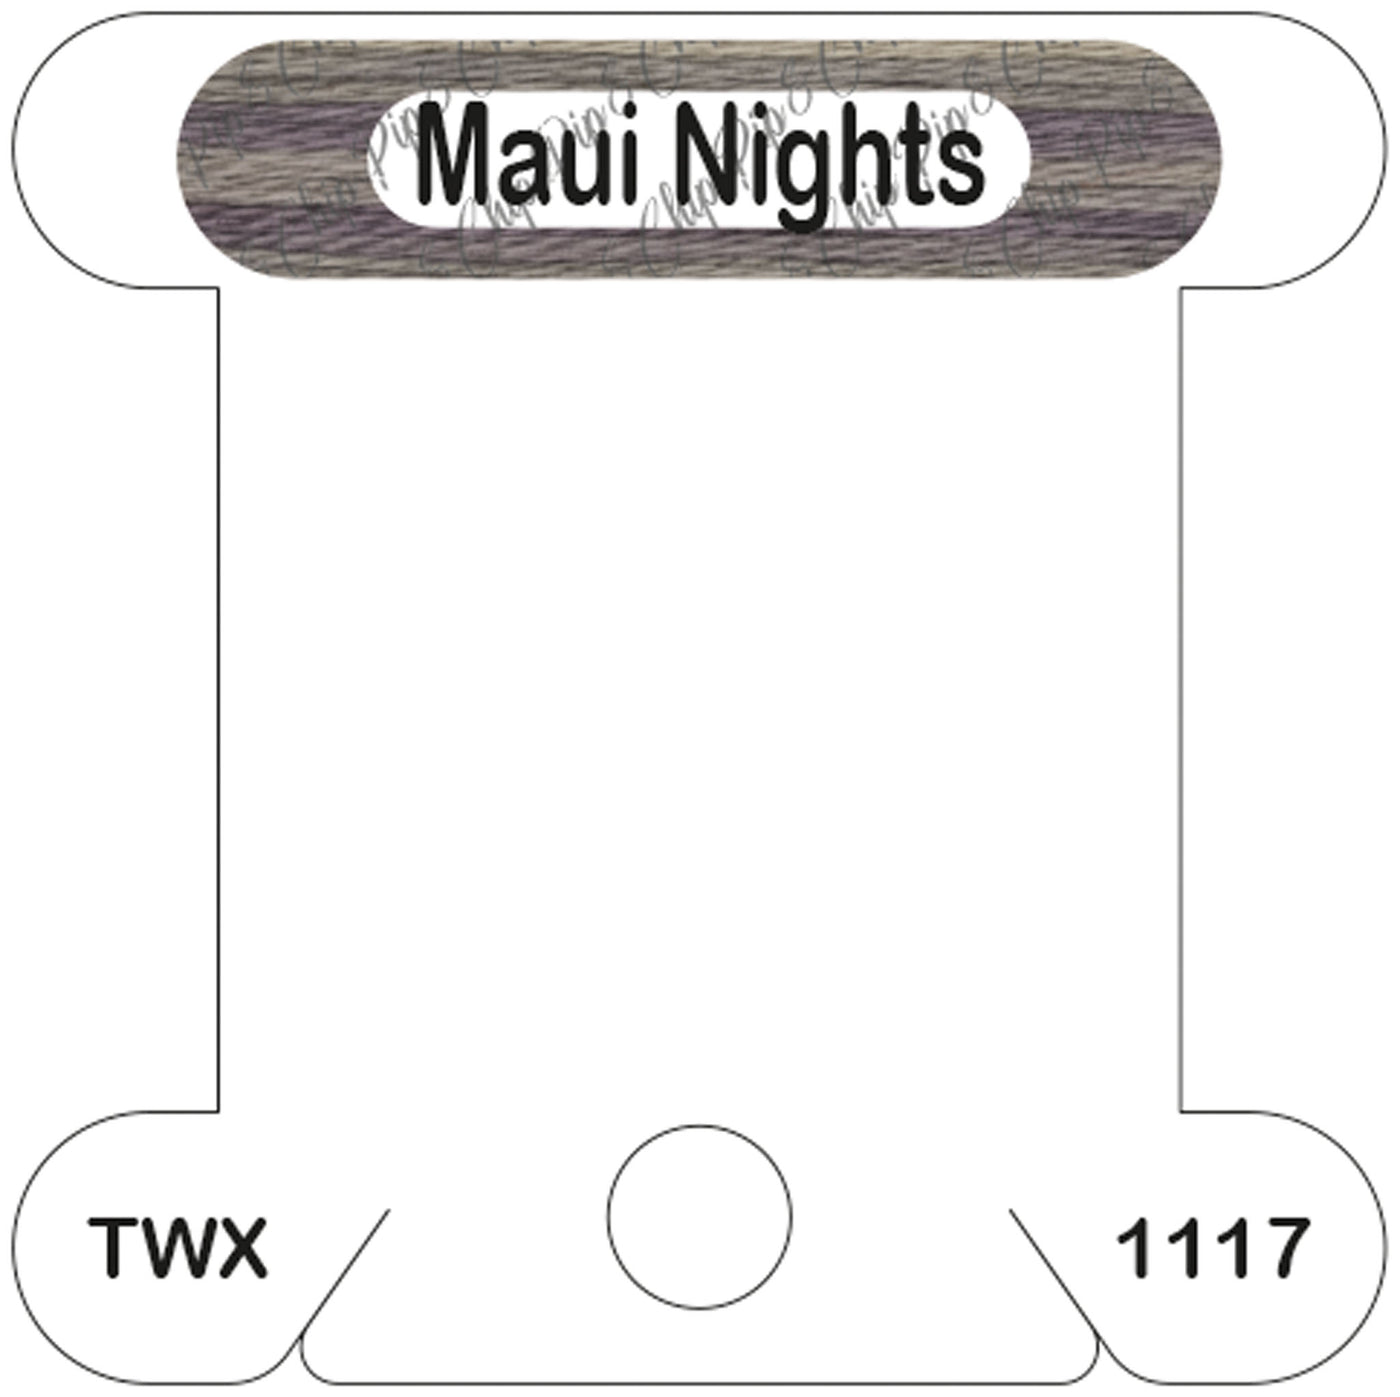 ThreadworX Maui Nights acrylic bobbin